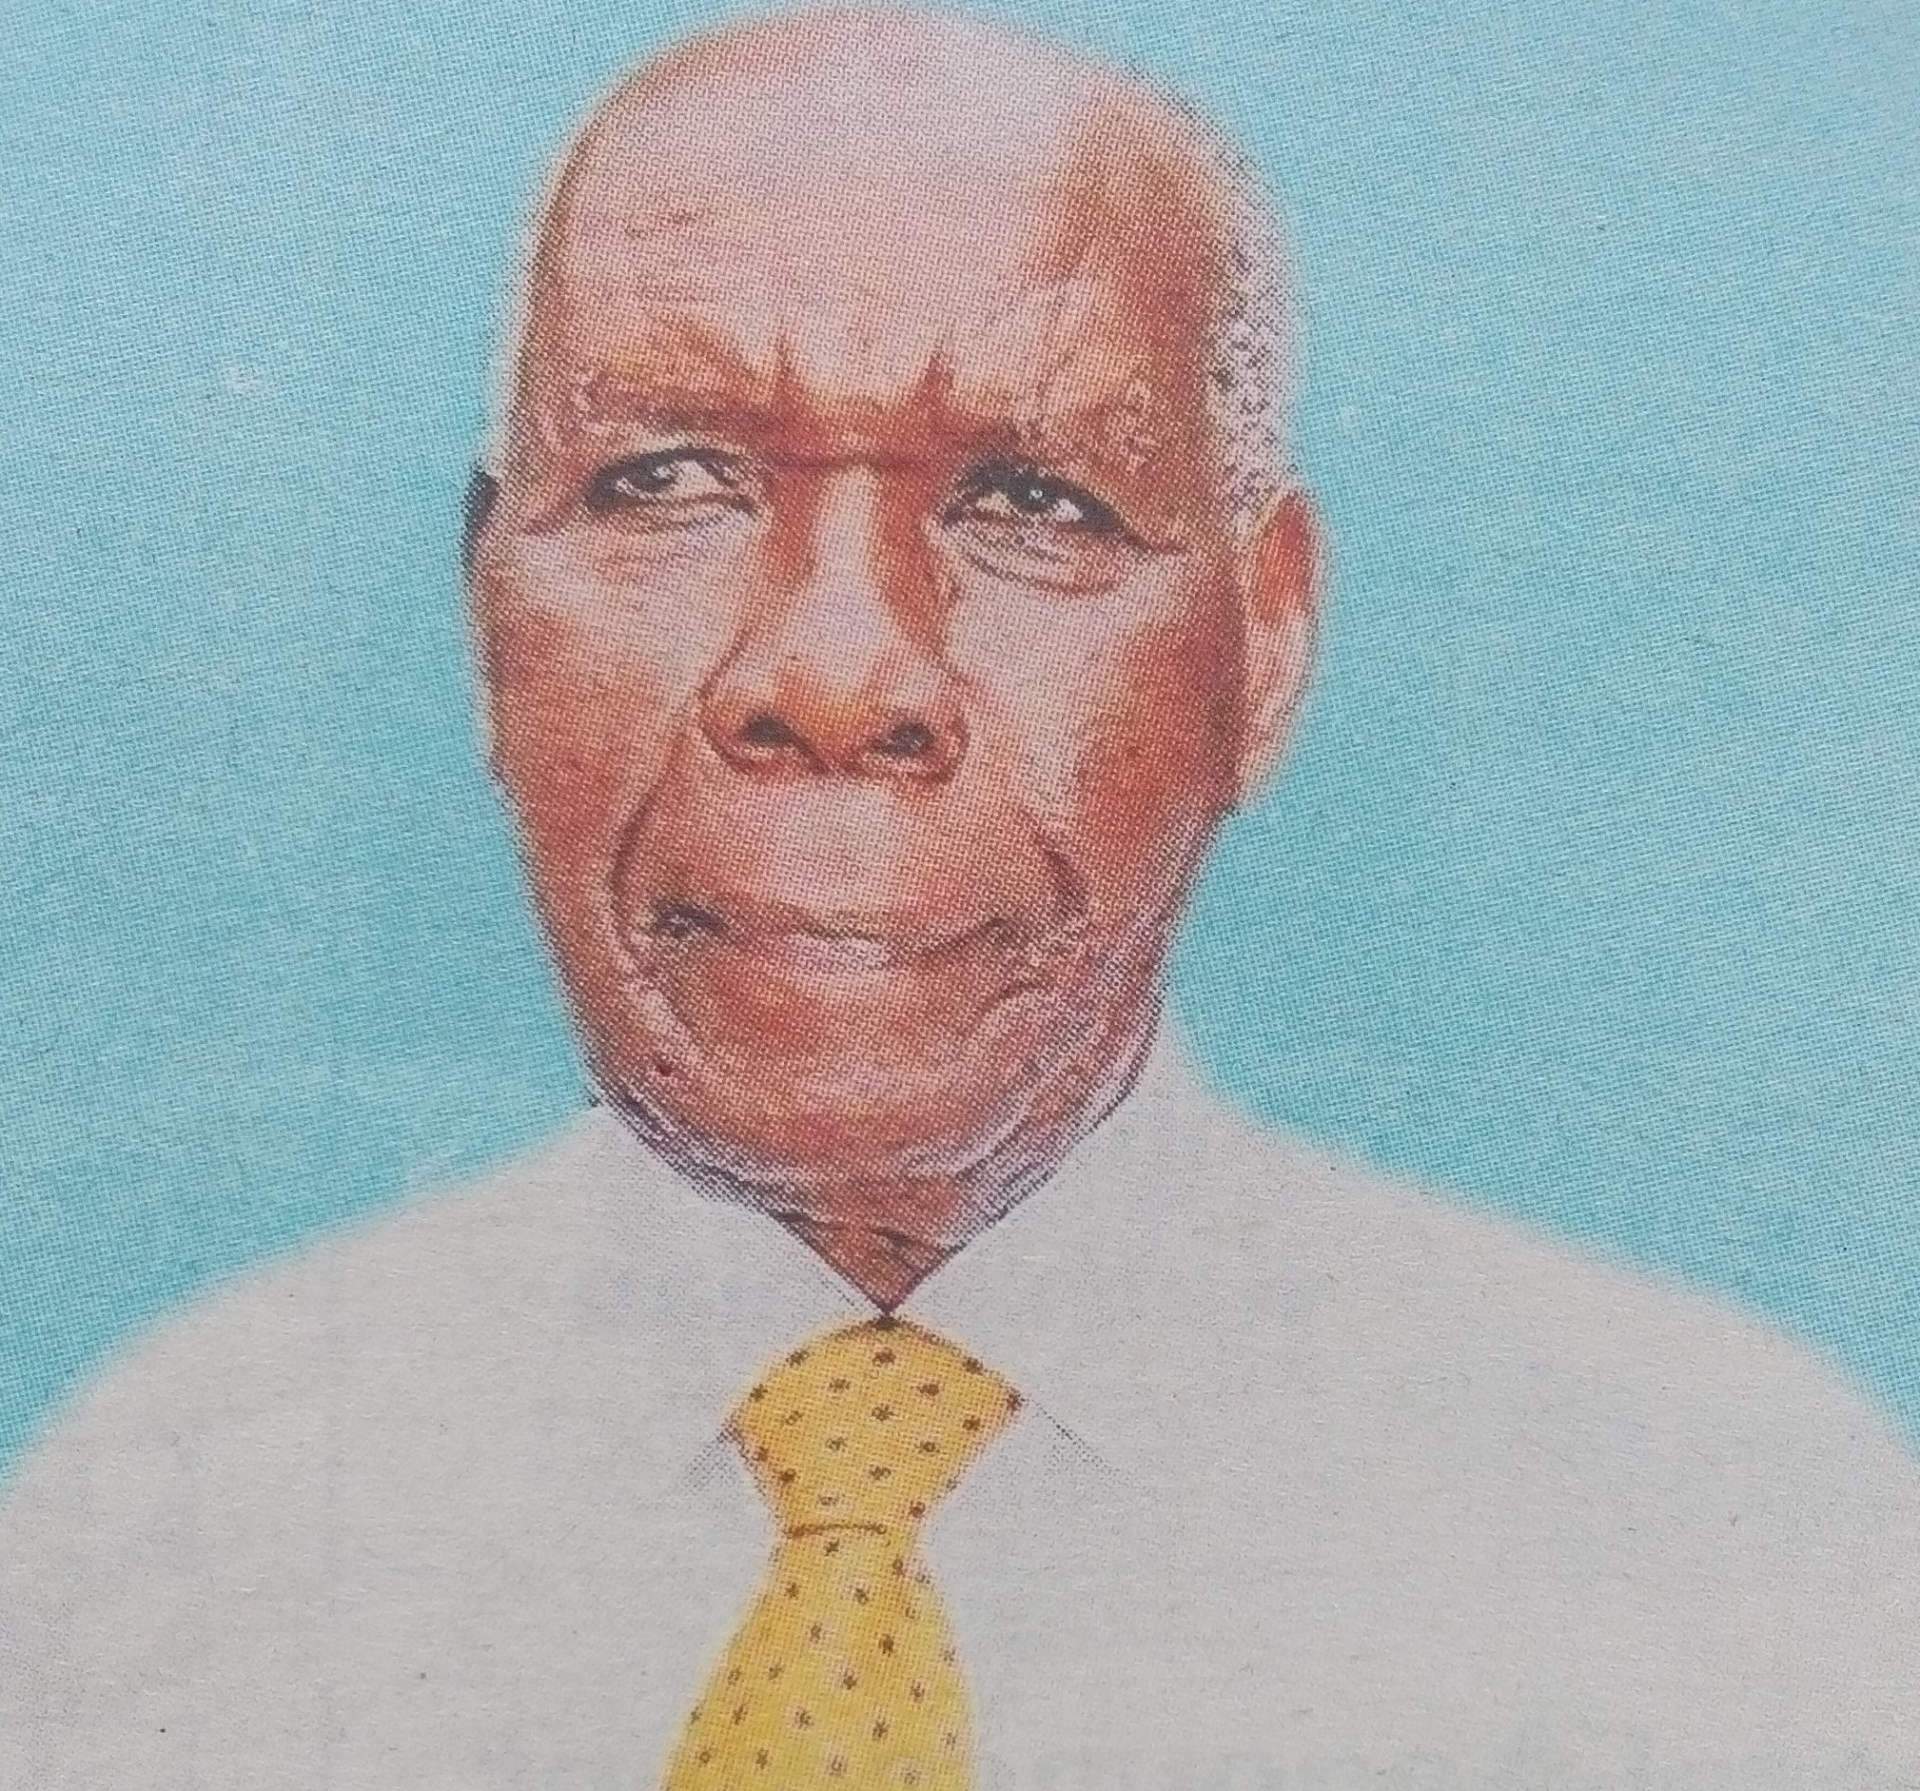 Obituary Image of Evanson Kamau Munira